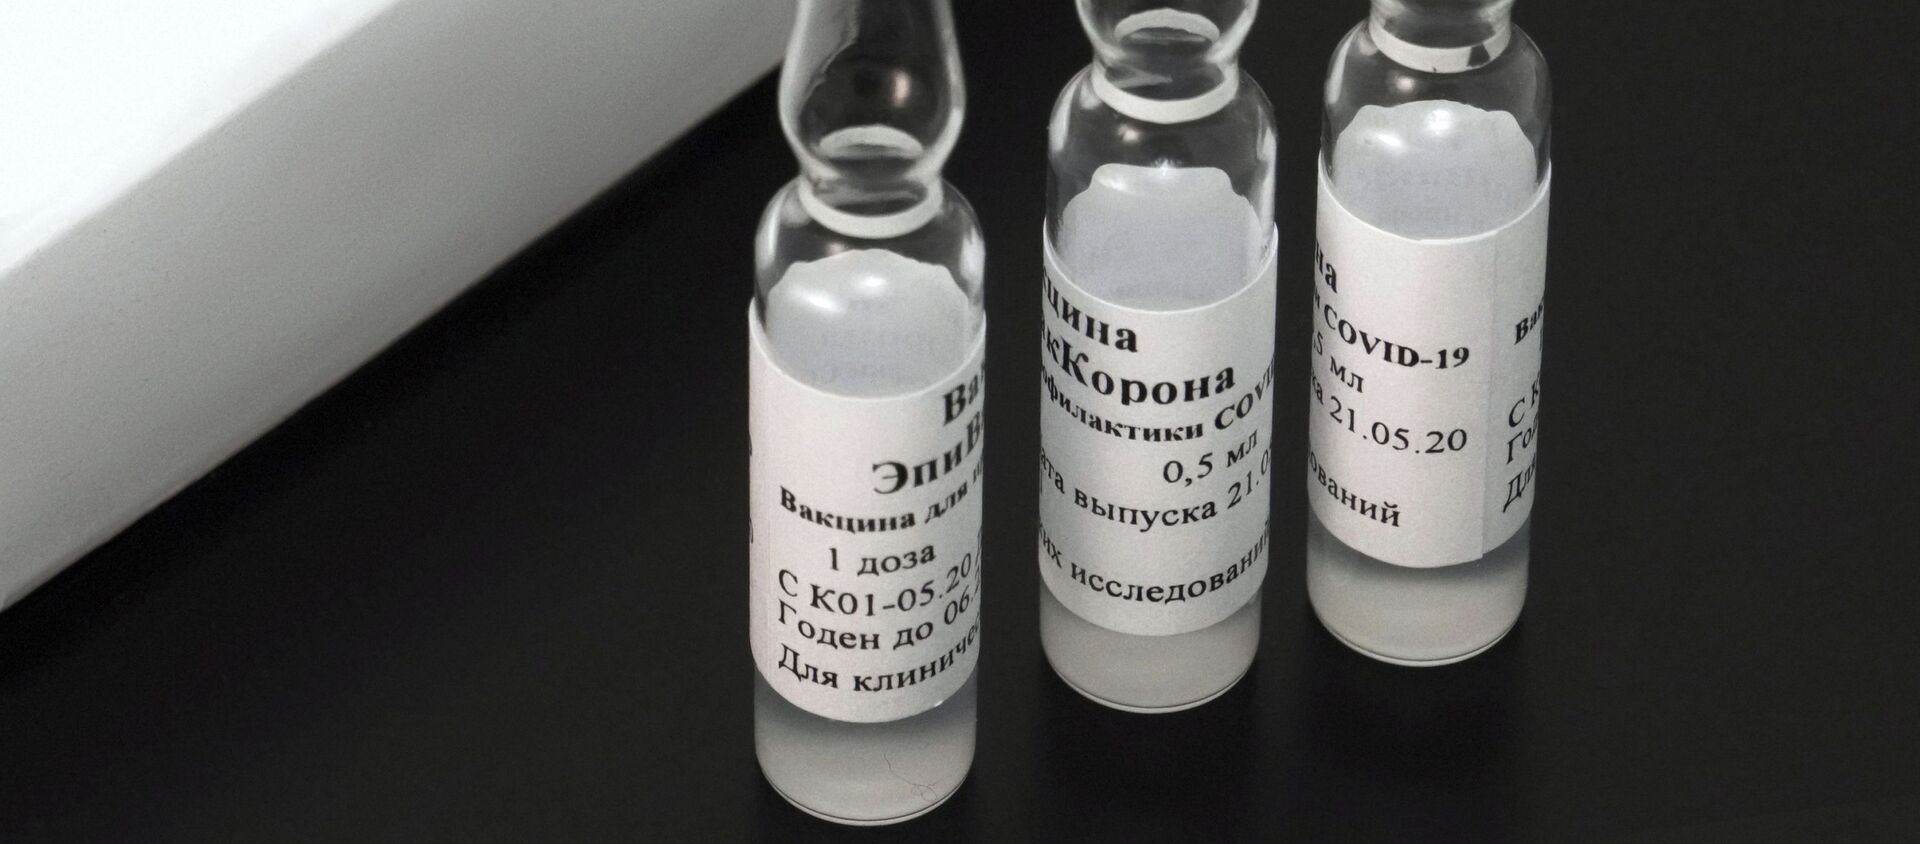 Вакцина от коронавируса ЭпиВакКорона - Sputnik Беларусь, 1920, 04.02.2021